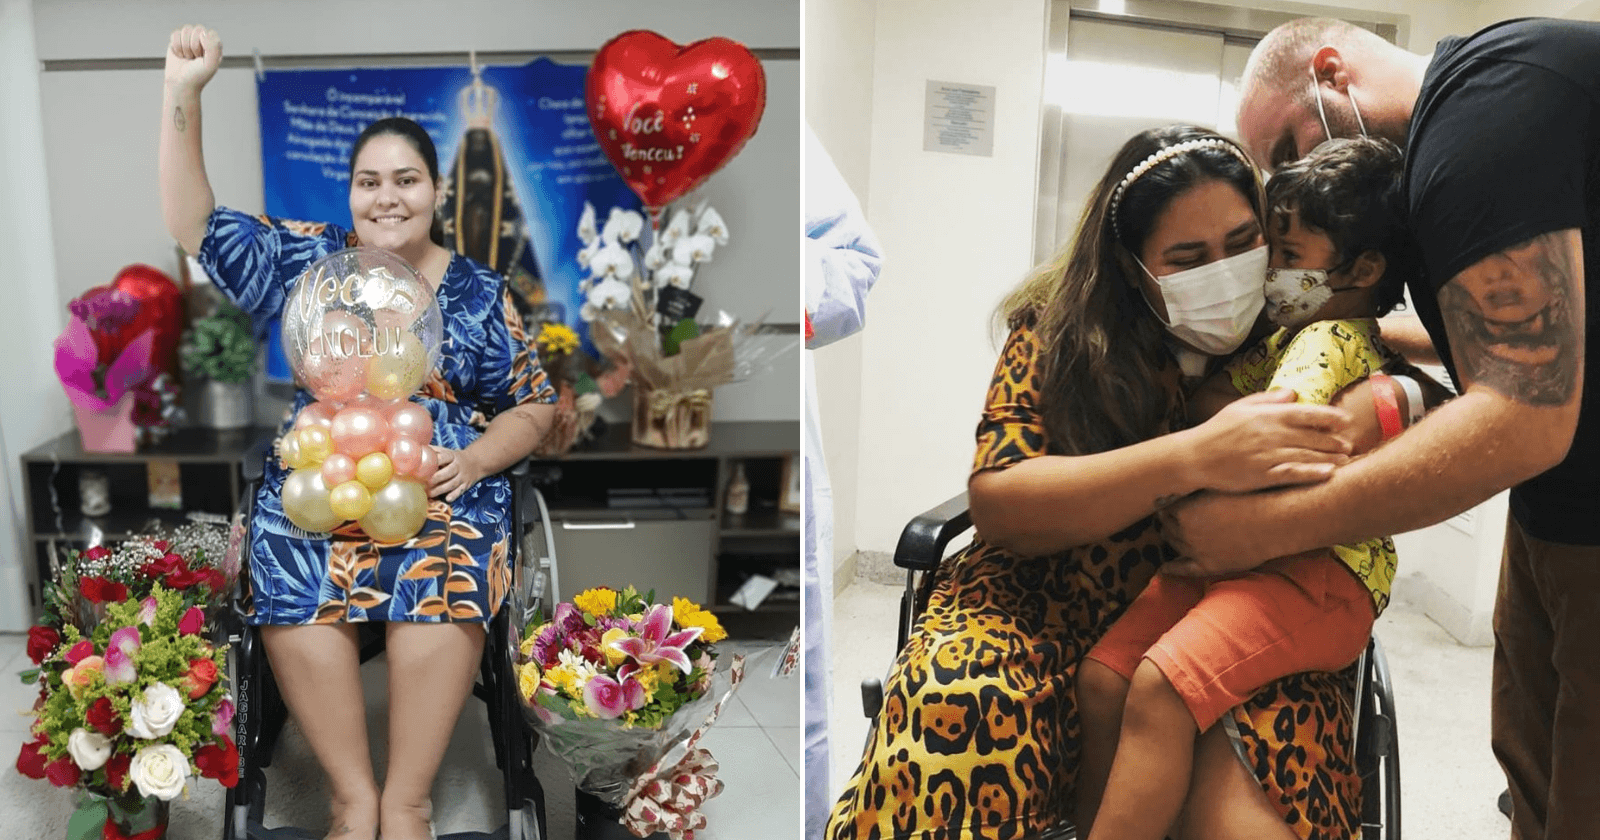 Carreata comemora alta de amiga após 44 dias internada com Covid